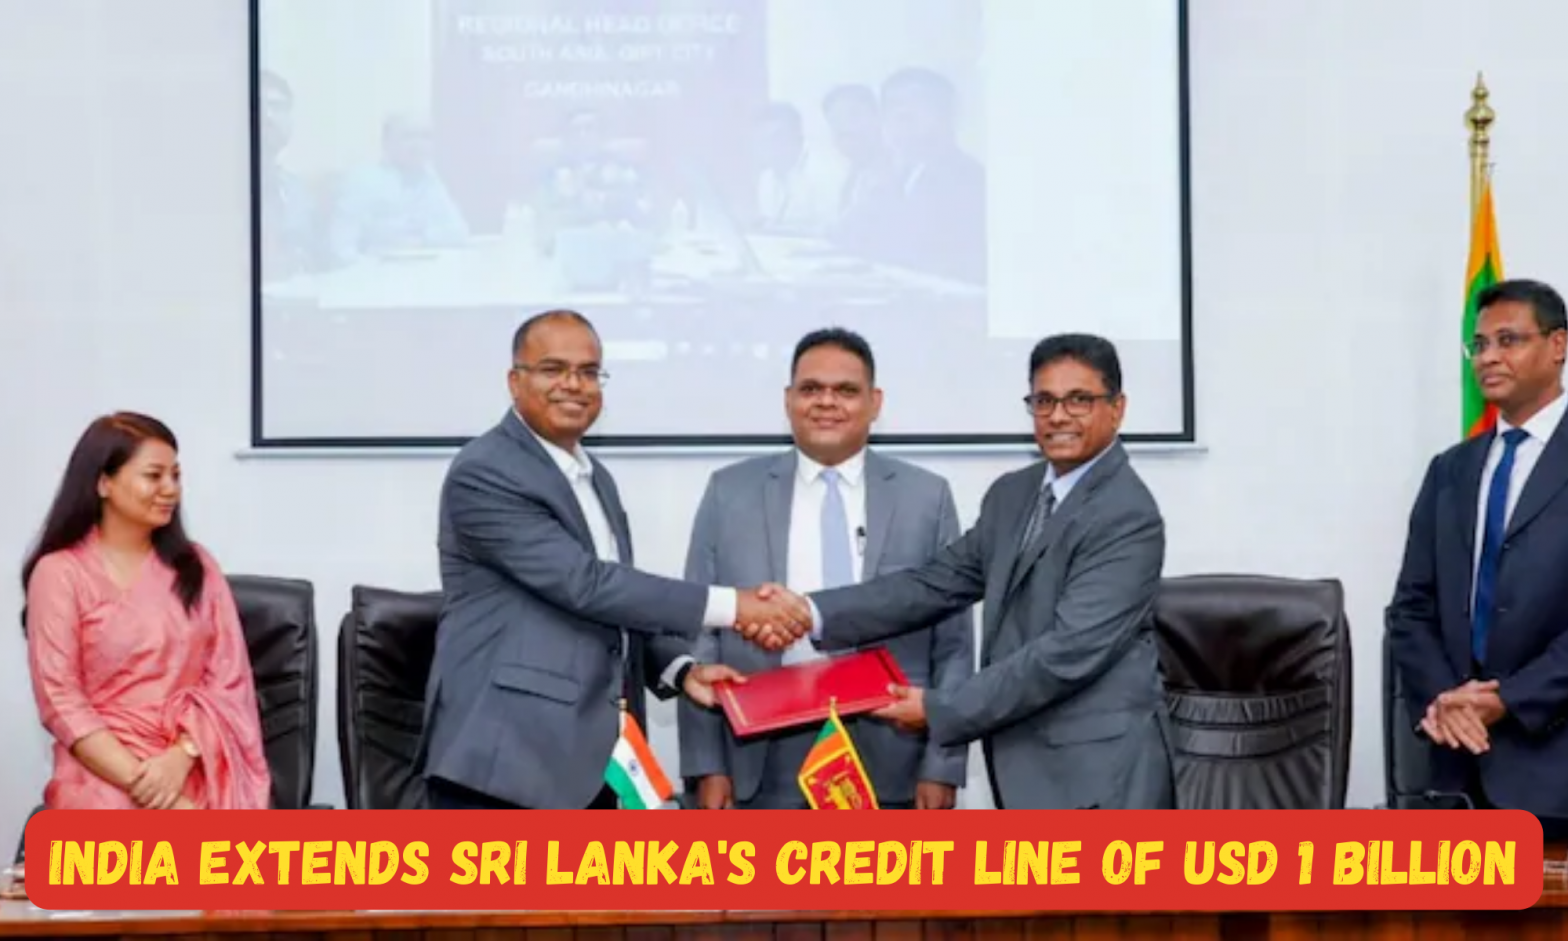 India extends Sri Lanka's credit line of USD 1 billion